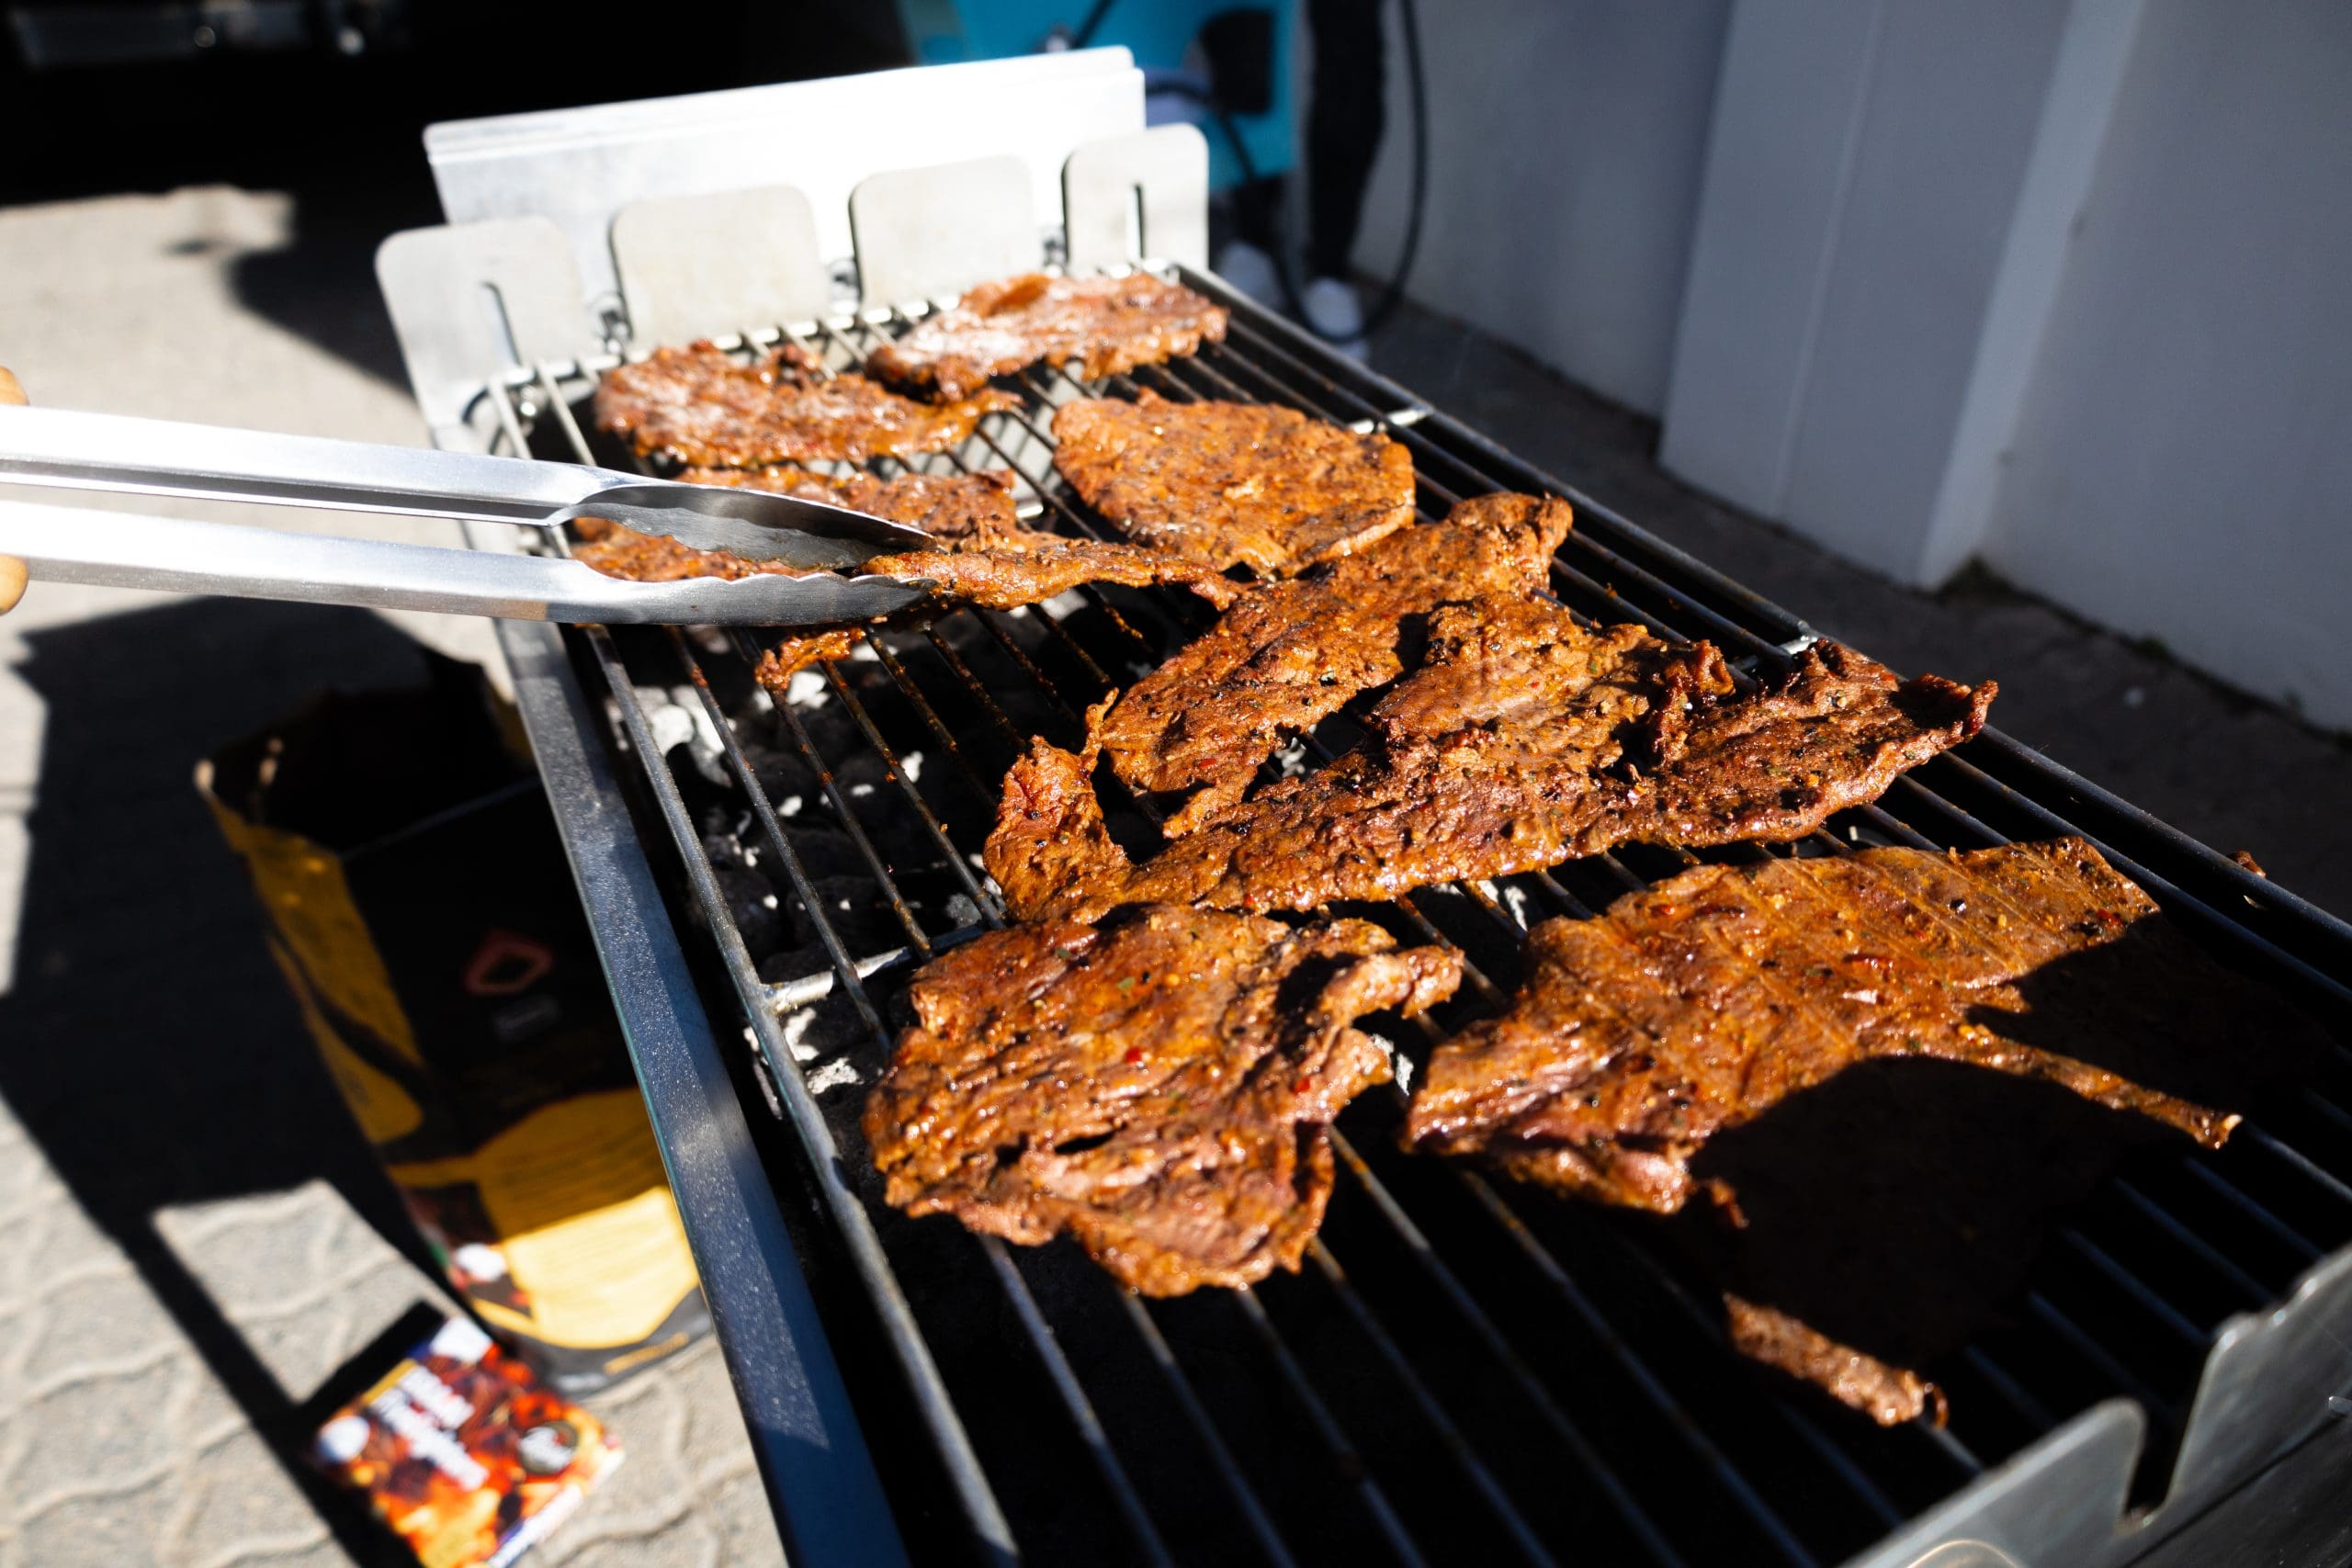 Beef pregos made on a souvla braai flat grill